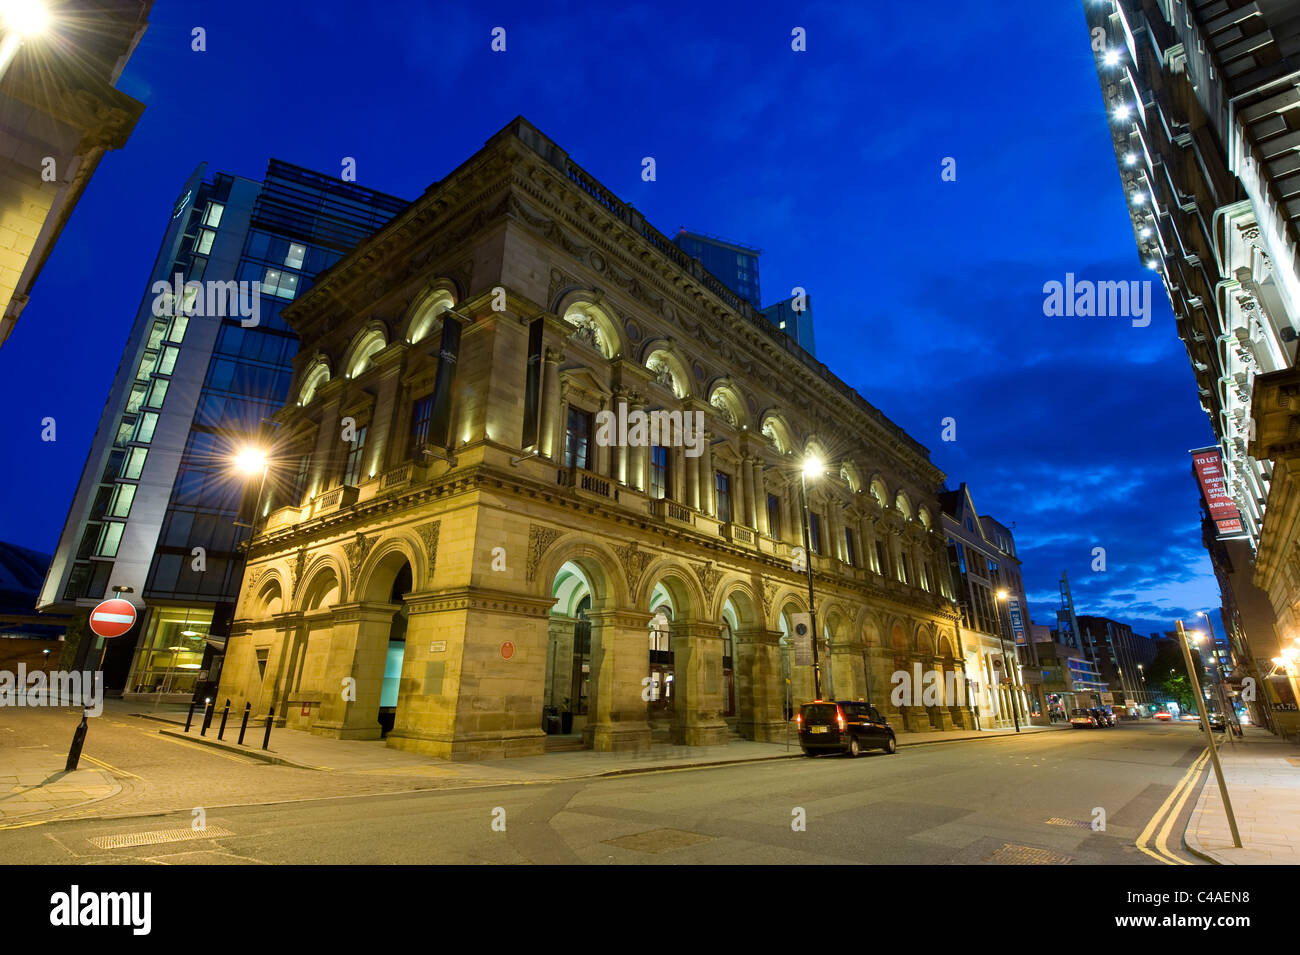 The Free Trade Hall (Radisson Edwardian Hotel), Peter Street, Manchester. Stock Photo